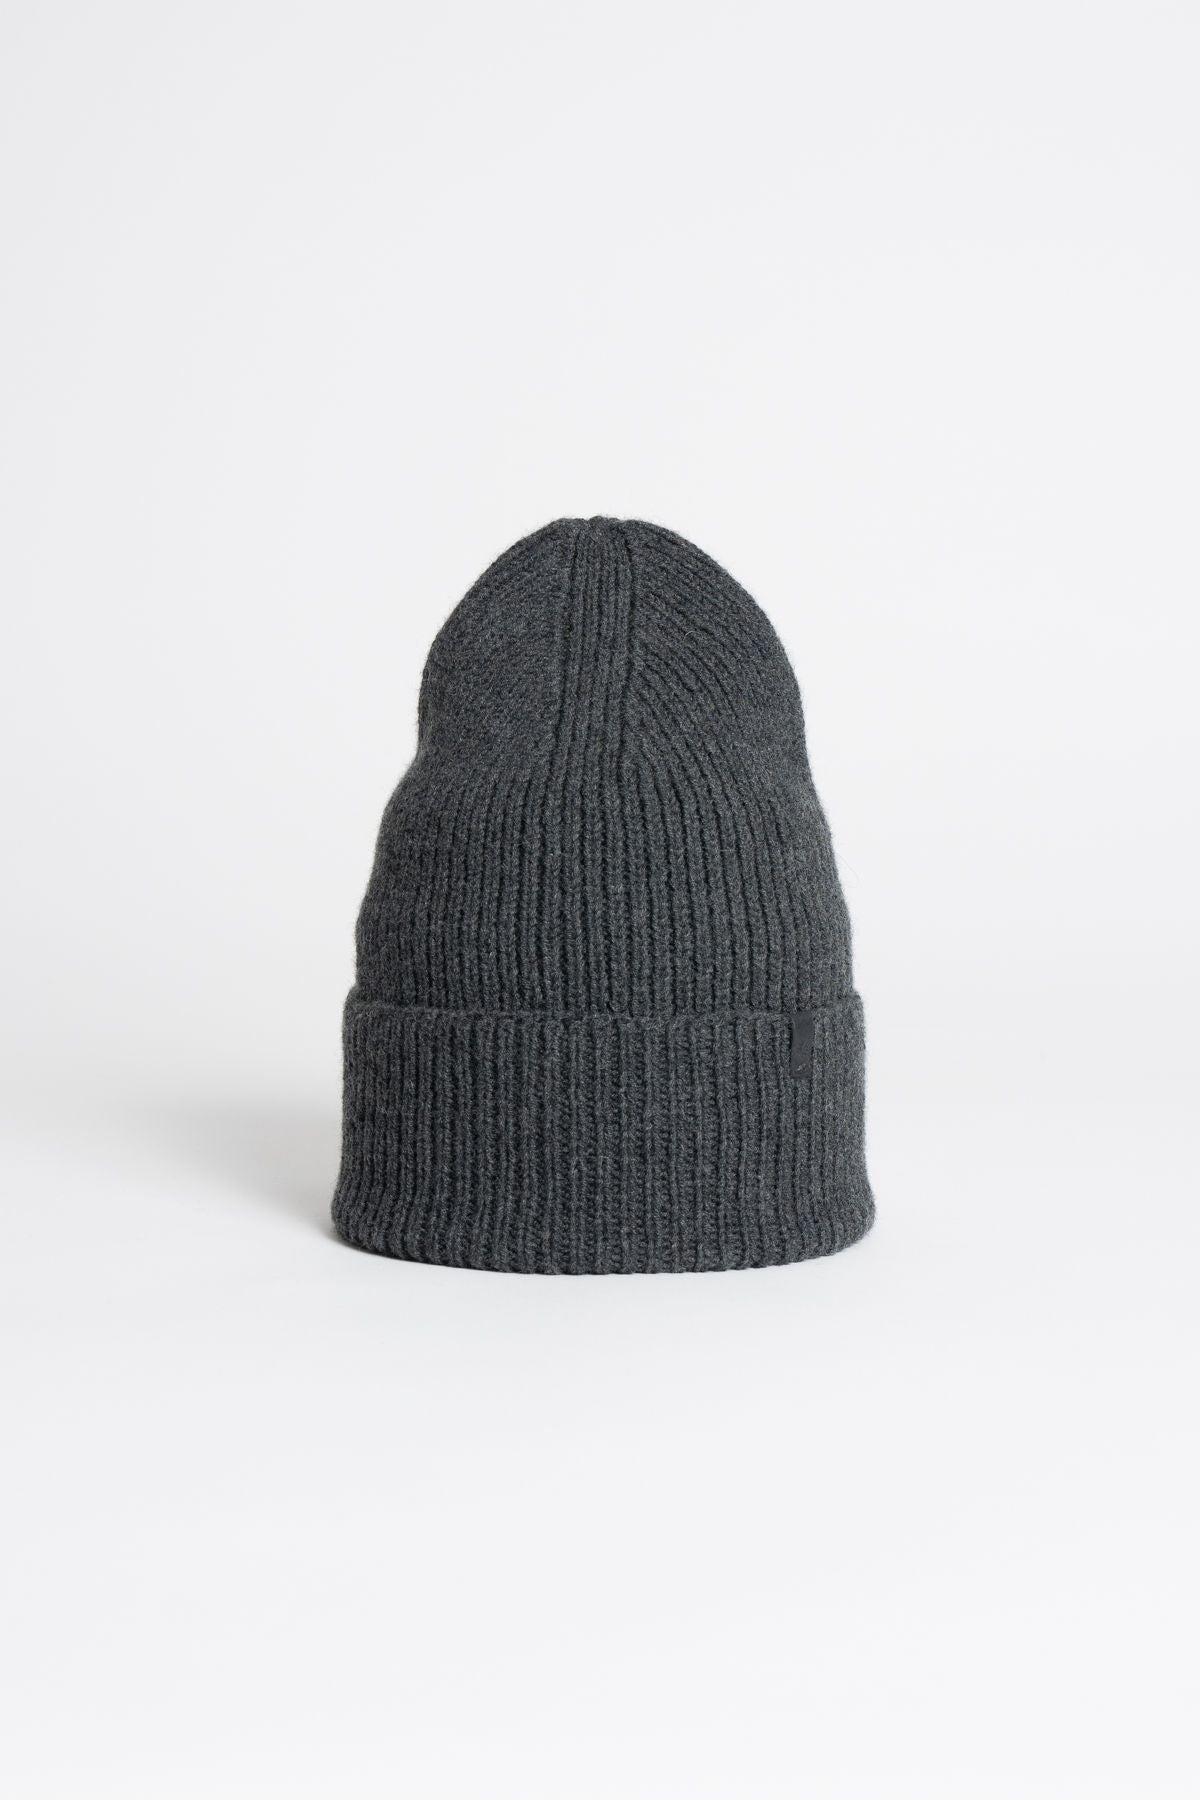 Merino Handknit Rib Hat in Charcoal Grey